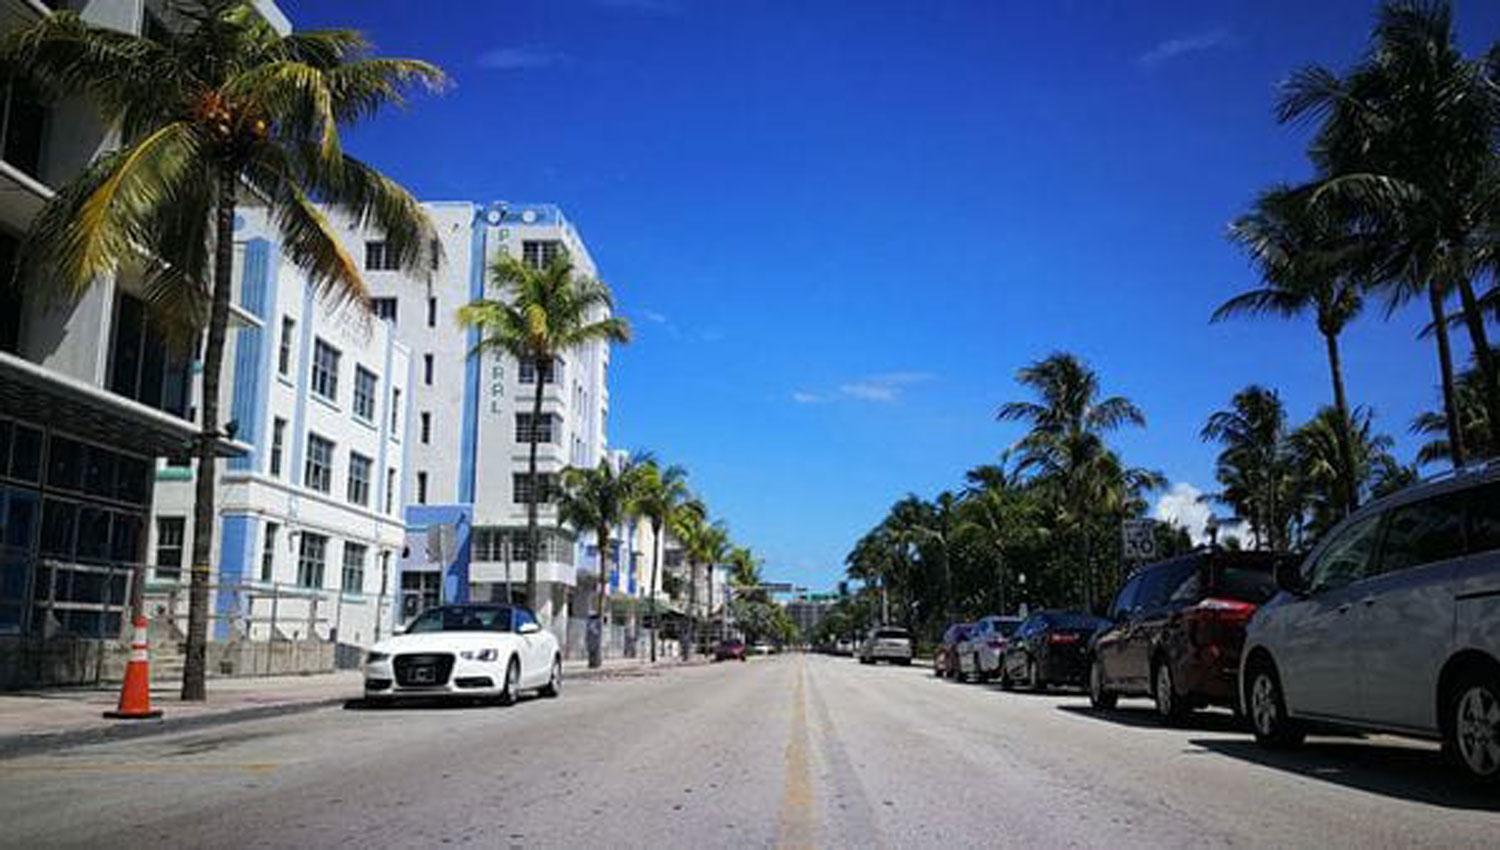 En South Beach las calles quedaron desiertas. FOTO TOMADA DE INFOBAE